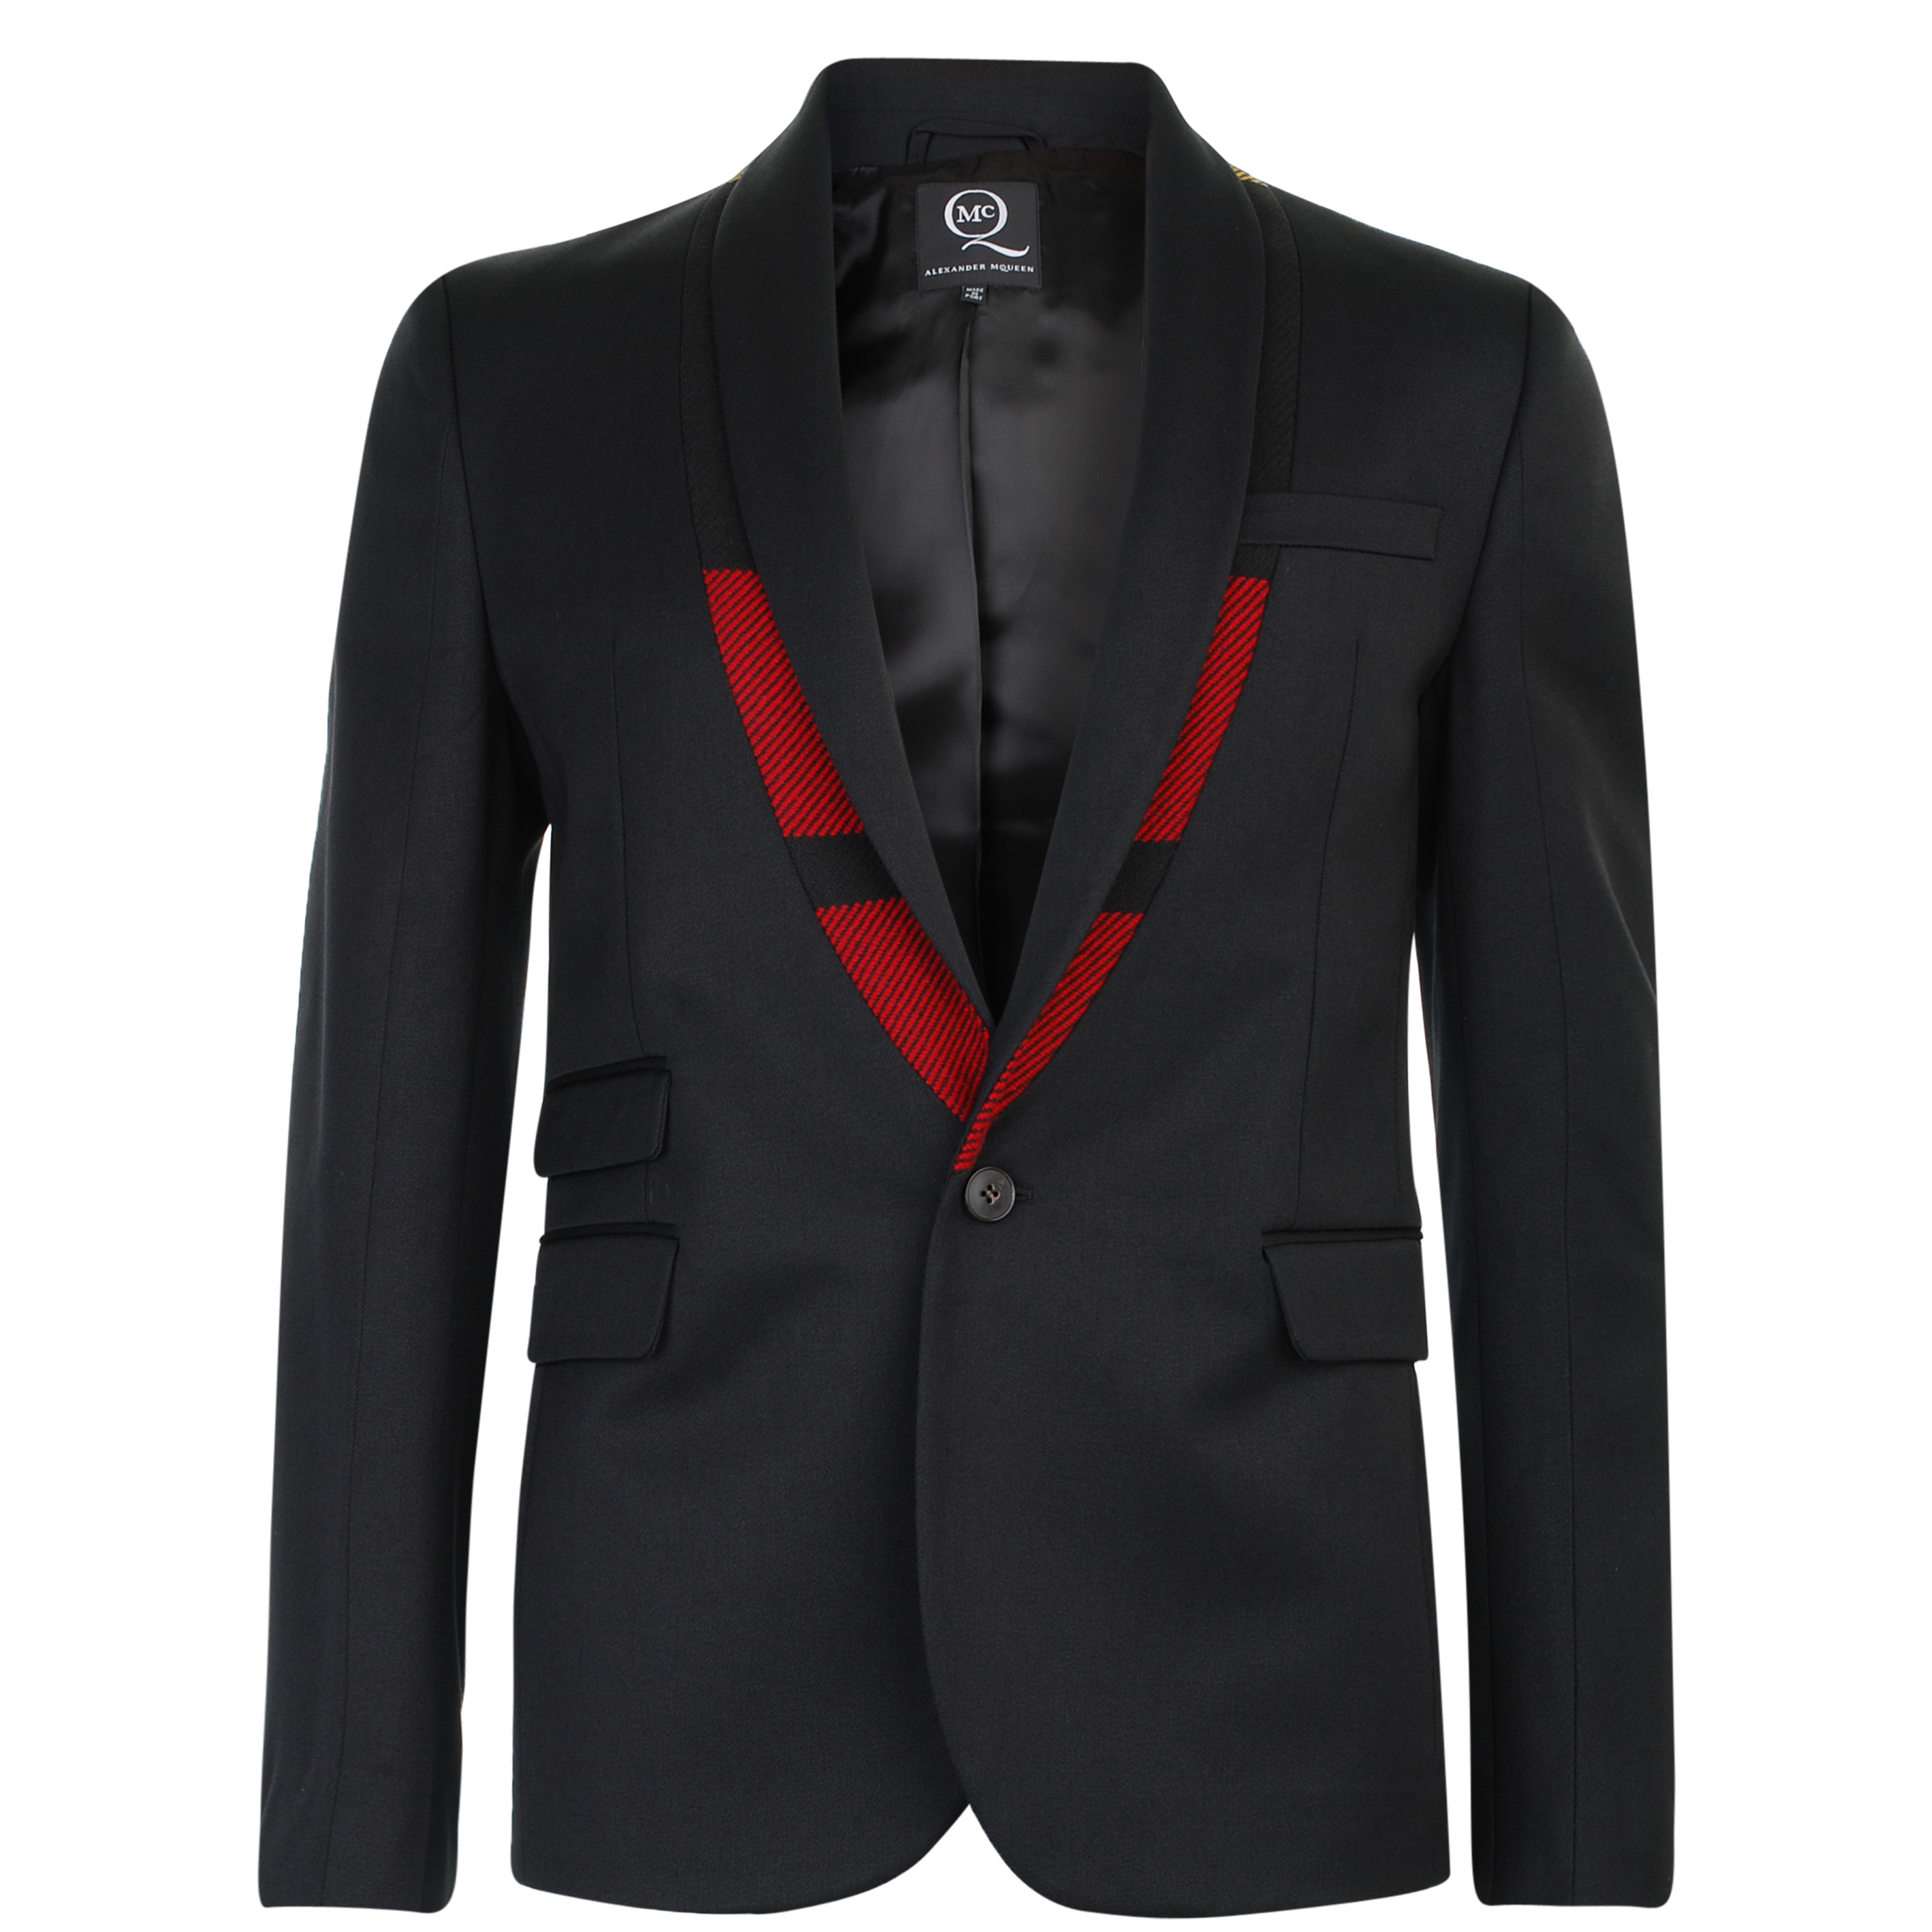 MCQ ALEXANDER MCQUEEN Ghost Tartan Trim Tuxedo Jacket £470.00 - CLOTHES ...